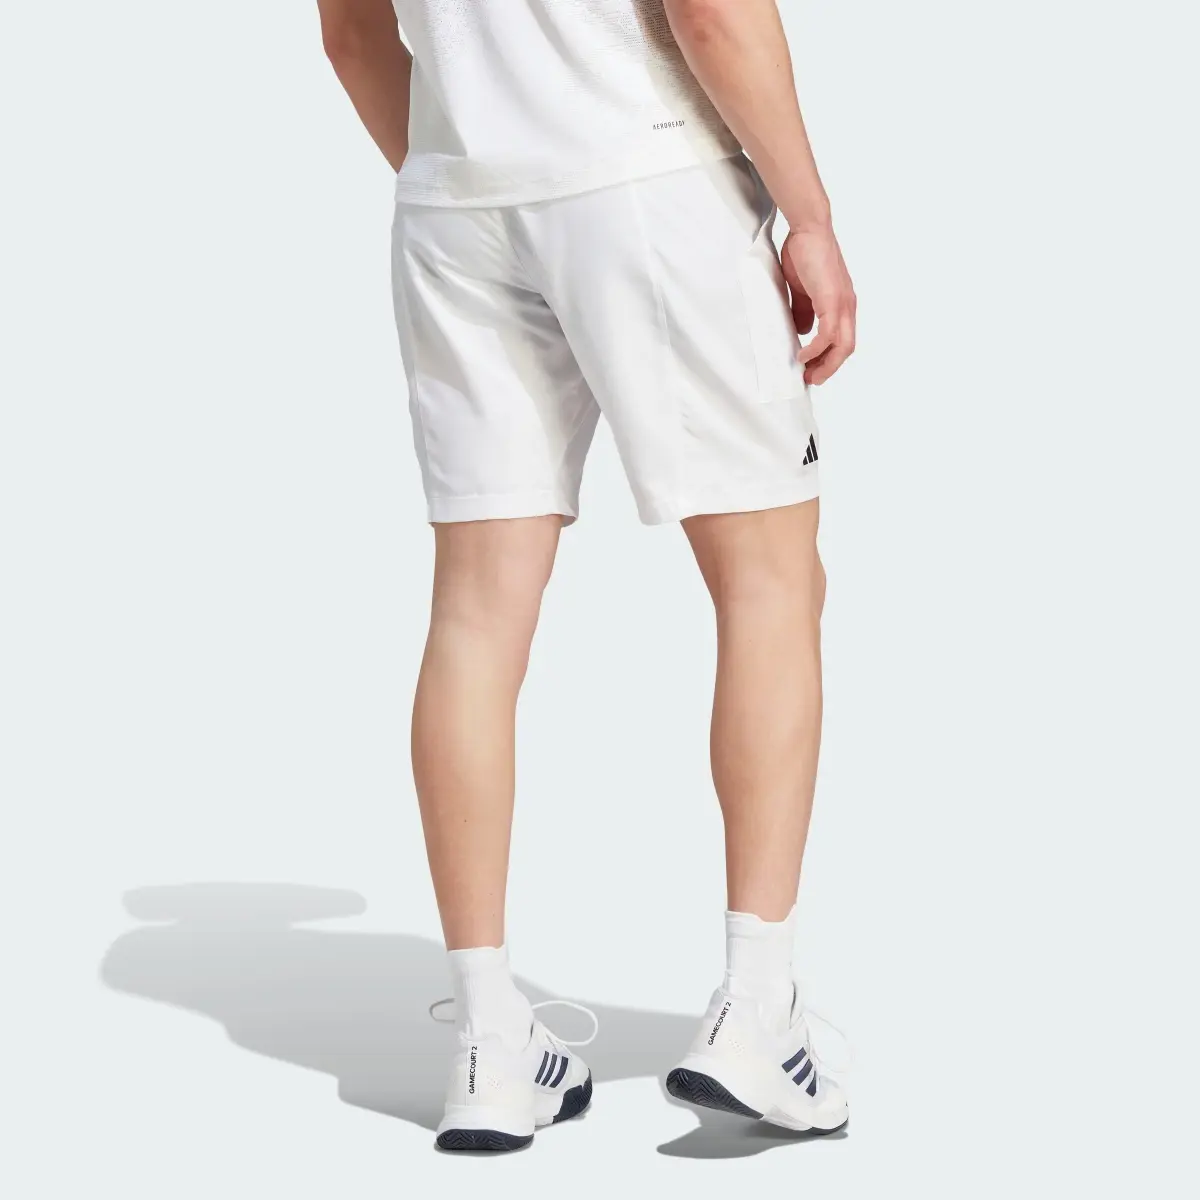 Adidas AEROREADY Pro Tennis Shorts. 2